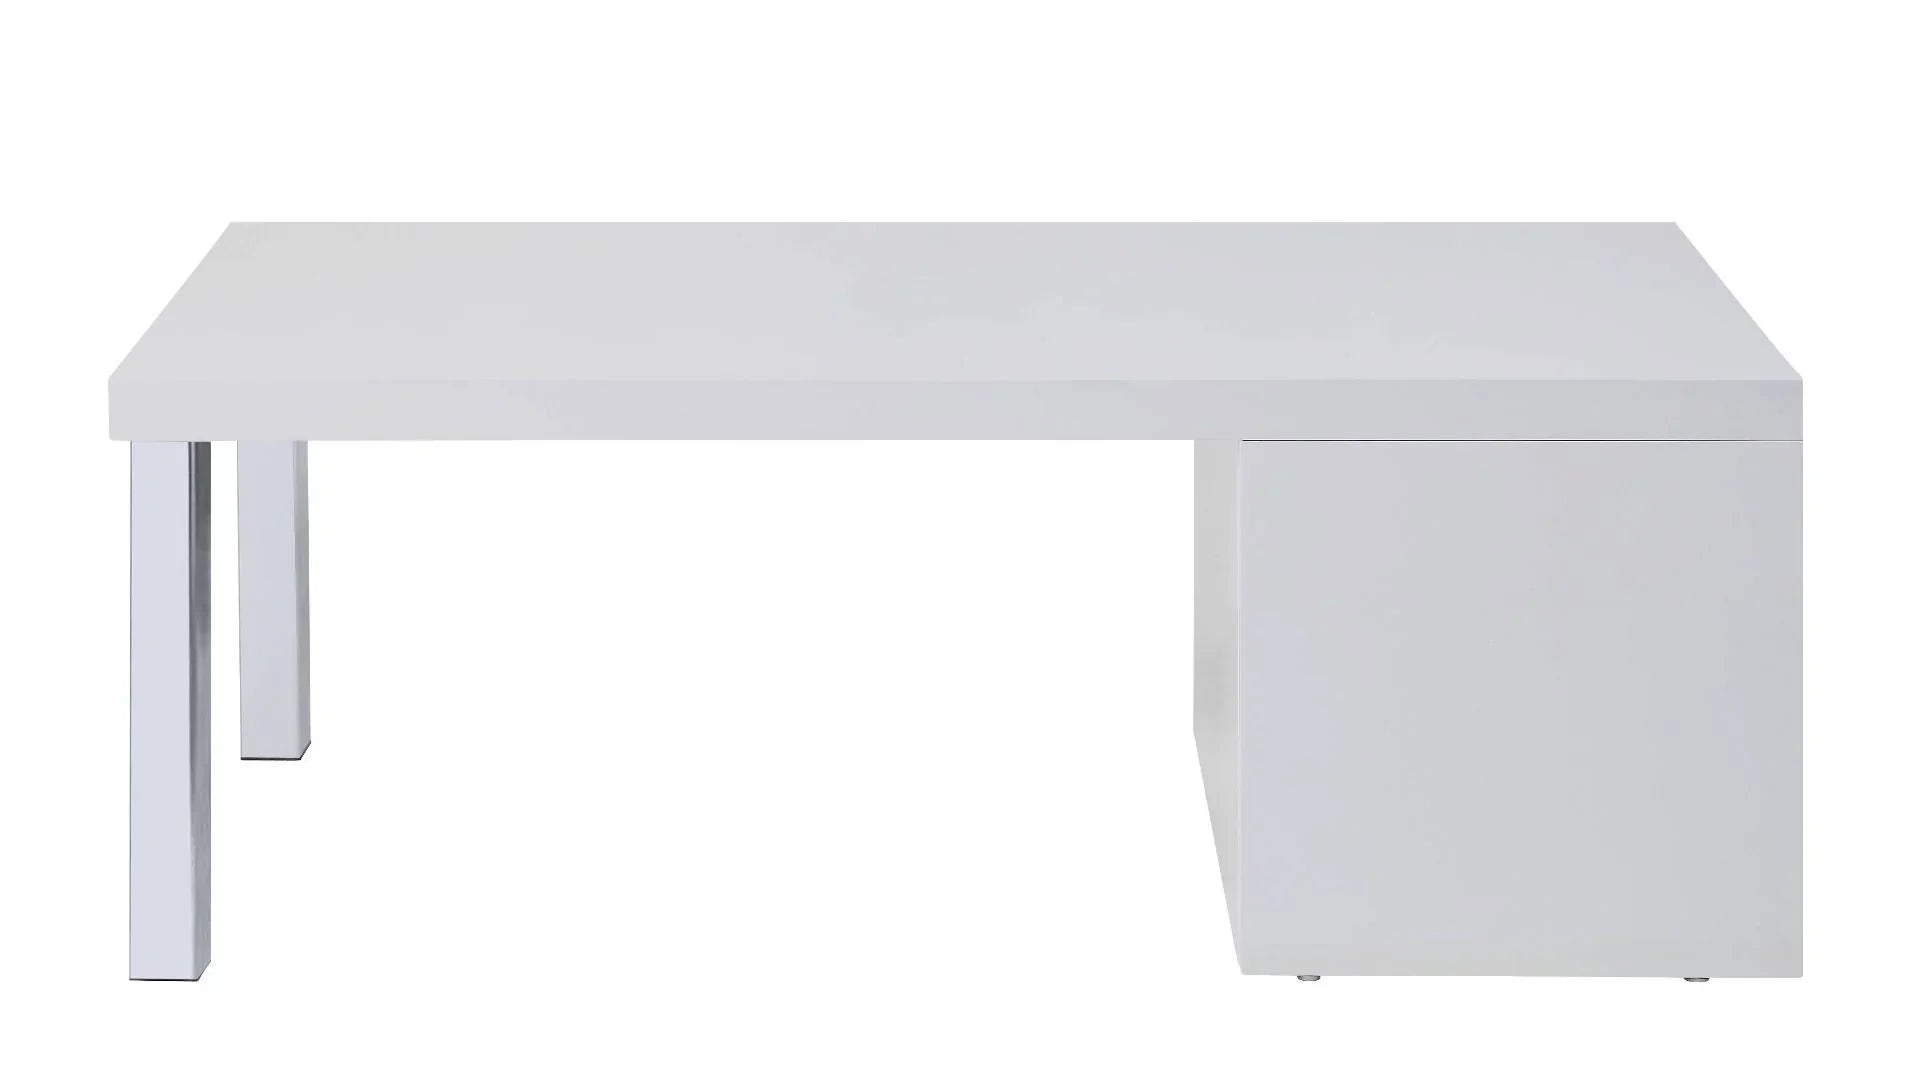 Harta White High Gloss & Chrome Coffee Table Model 82330 By ACME Furniture